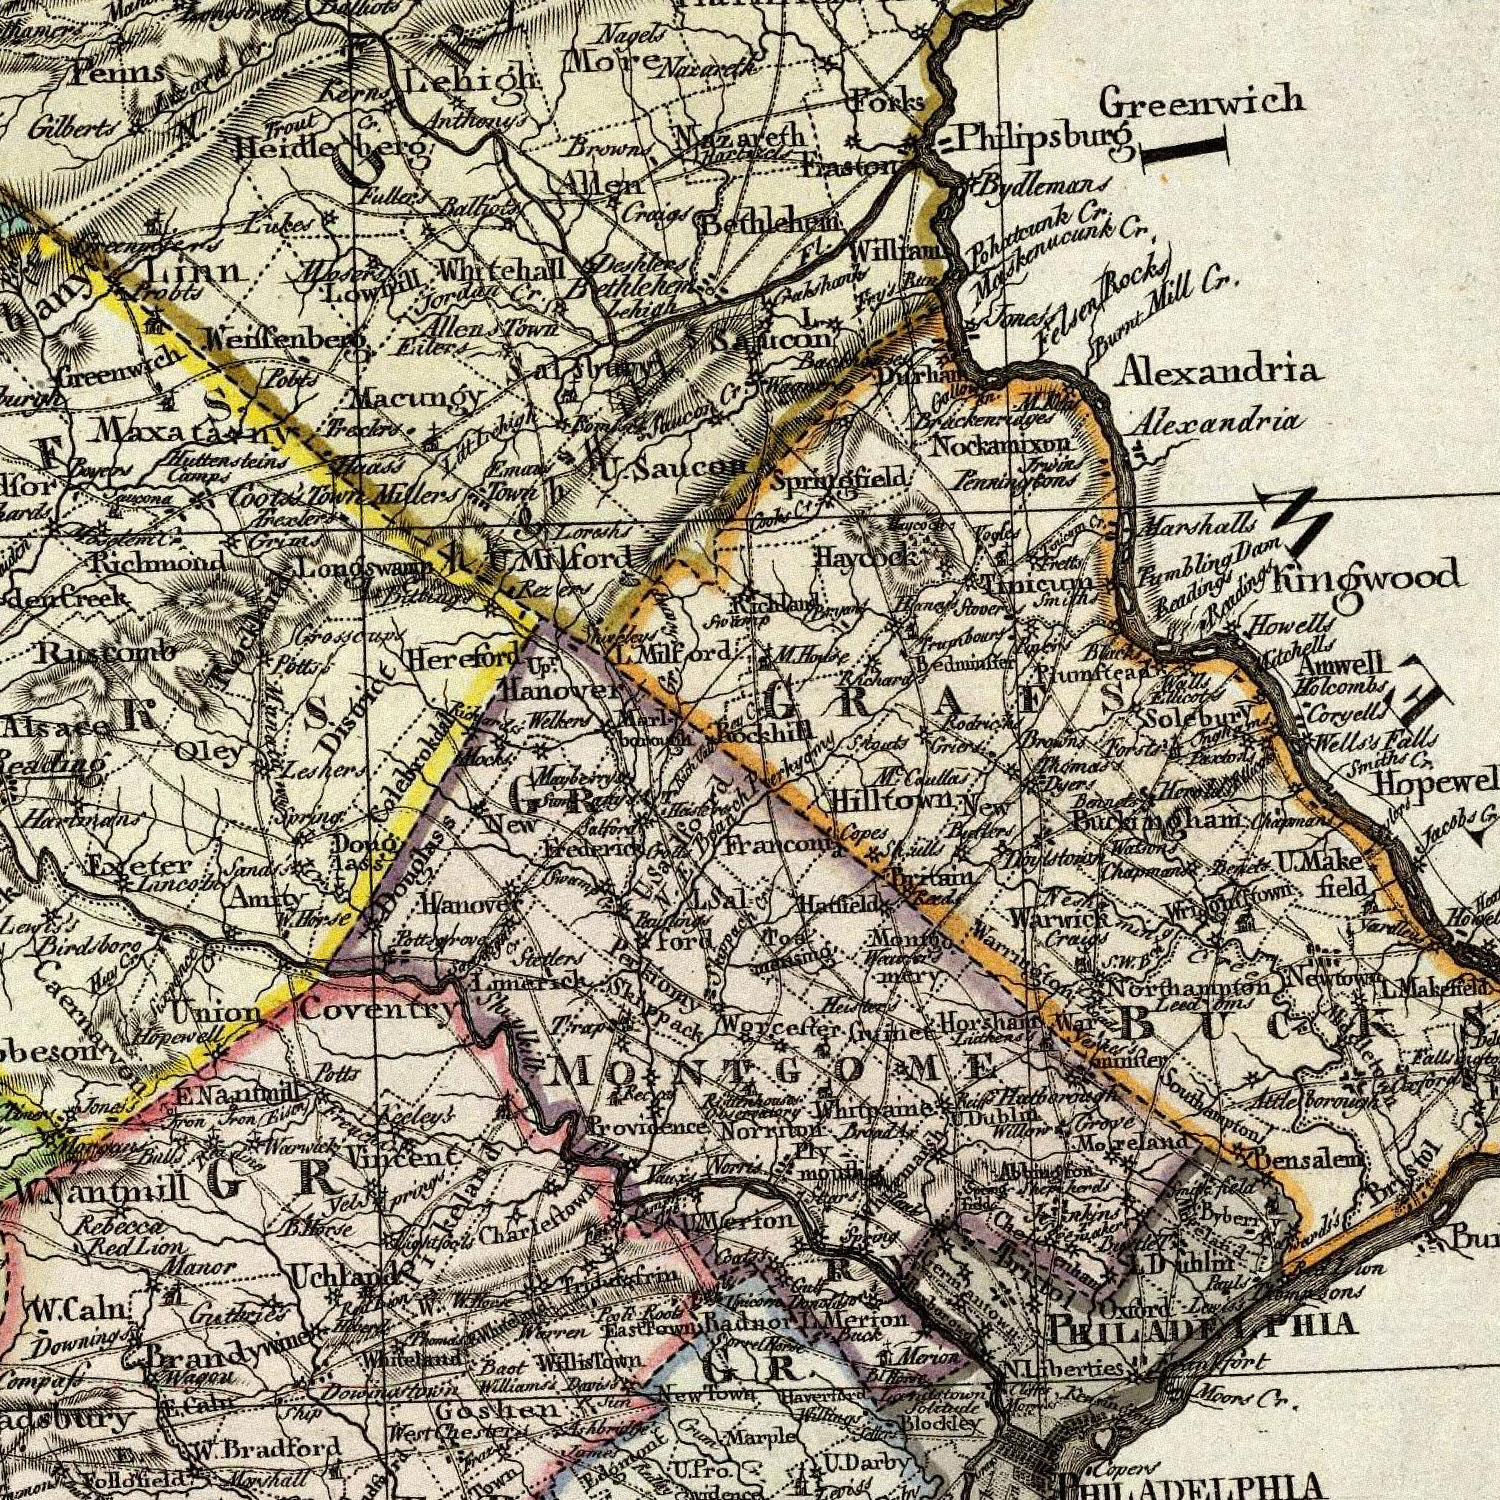 Rockhill Township, Pennsylvania on 1797 map © 2000 Cartography Associates (DavidRumsey.com)